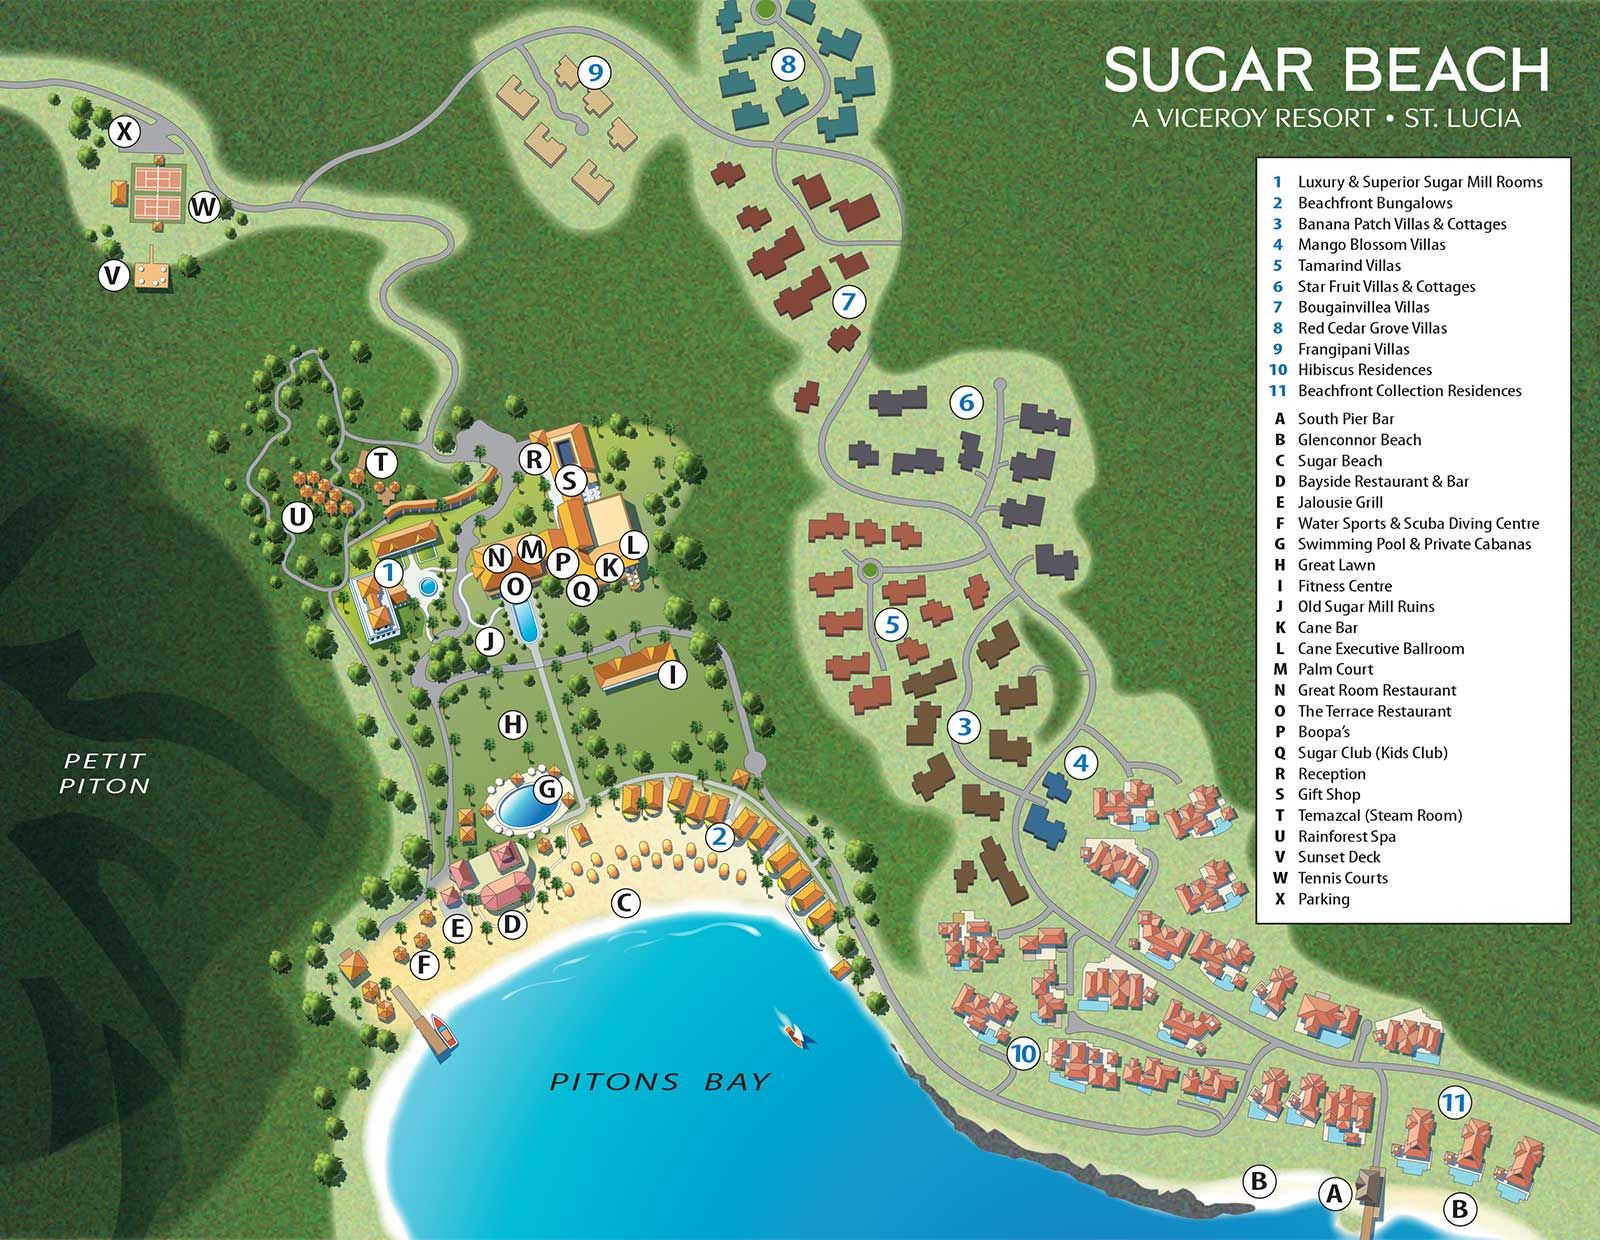 Sugar Beach, A Viceroy Resort Map